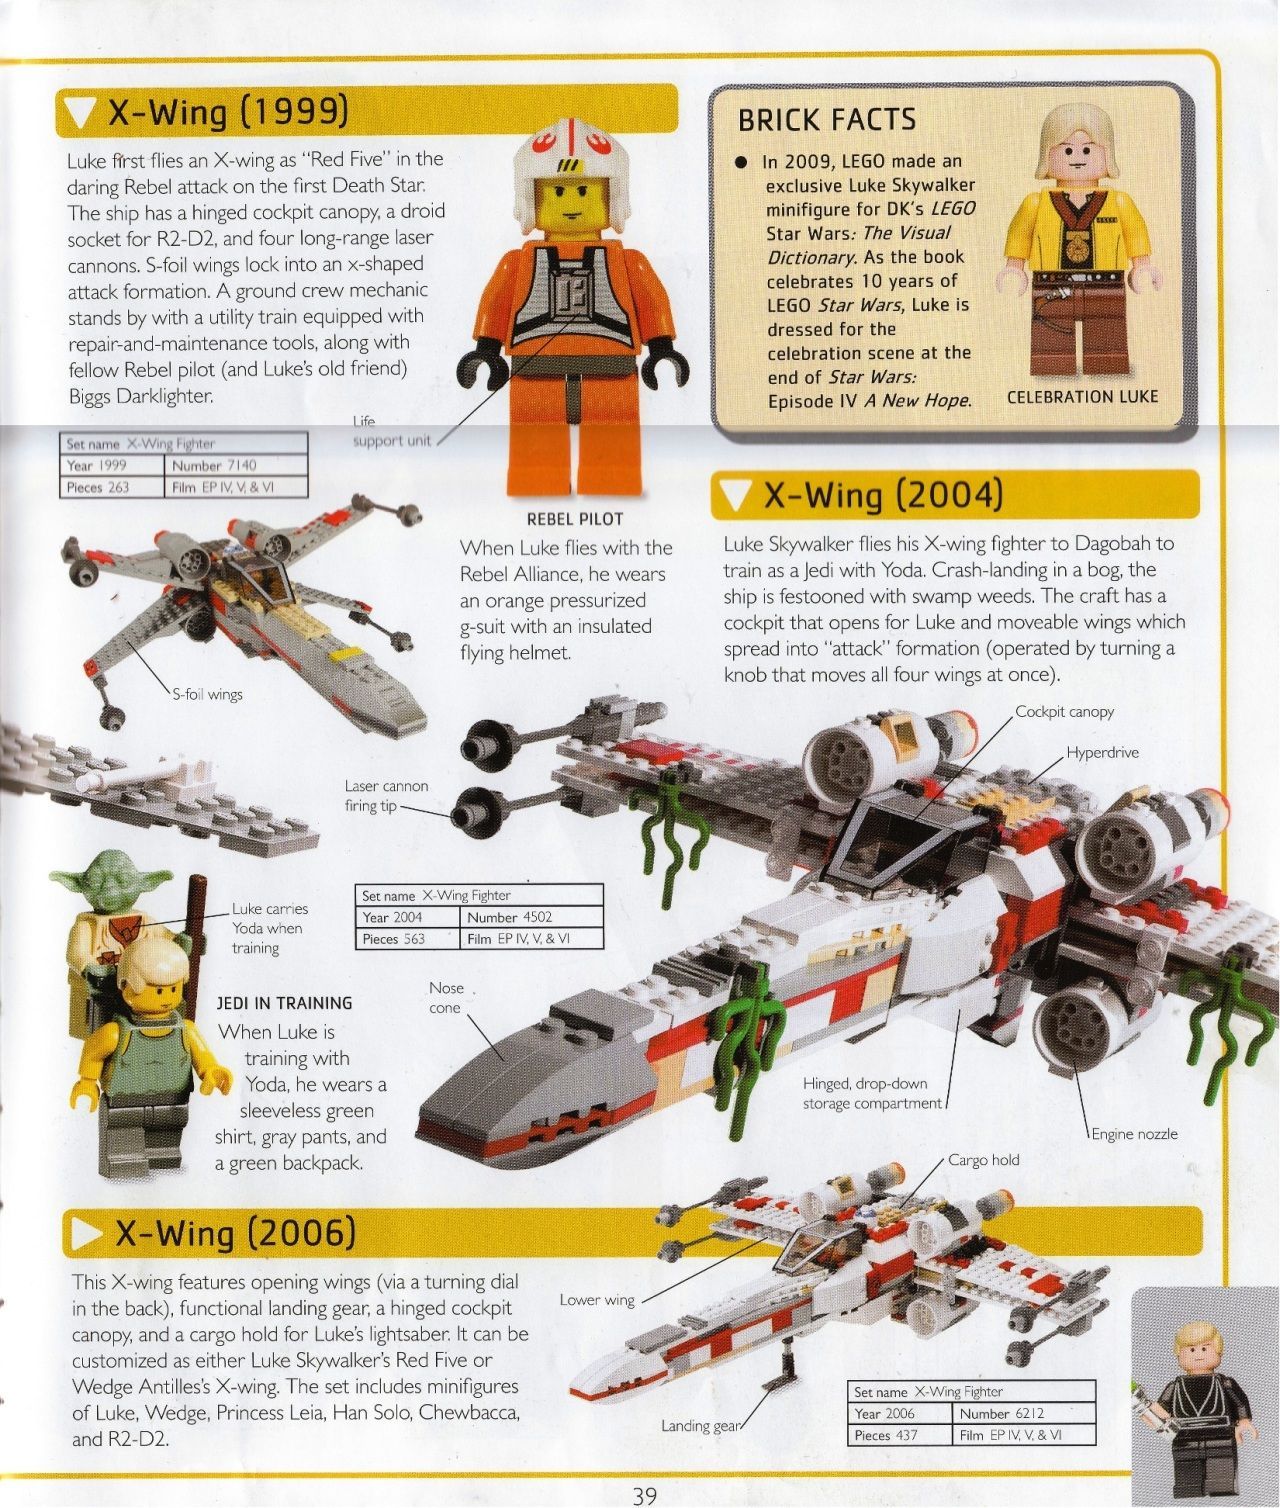 Lego Star Wars The Visual Dictionary 2009 Lego Star Wars The Visual Dictionary 2009 40